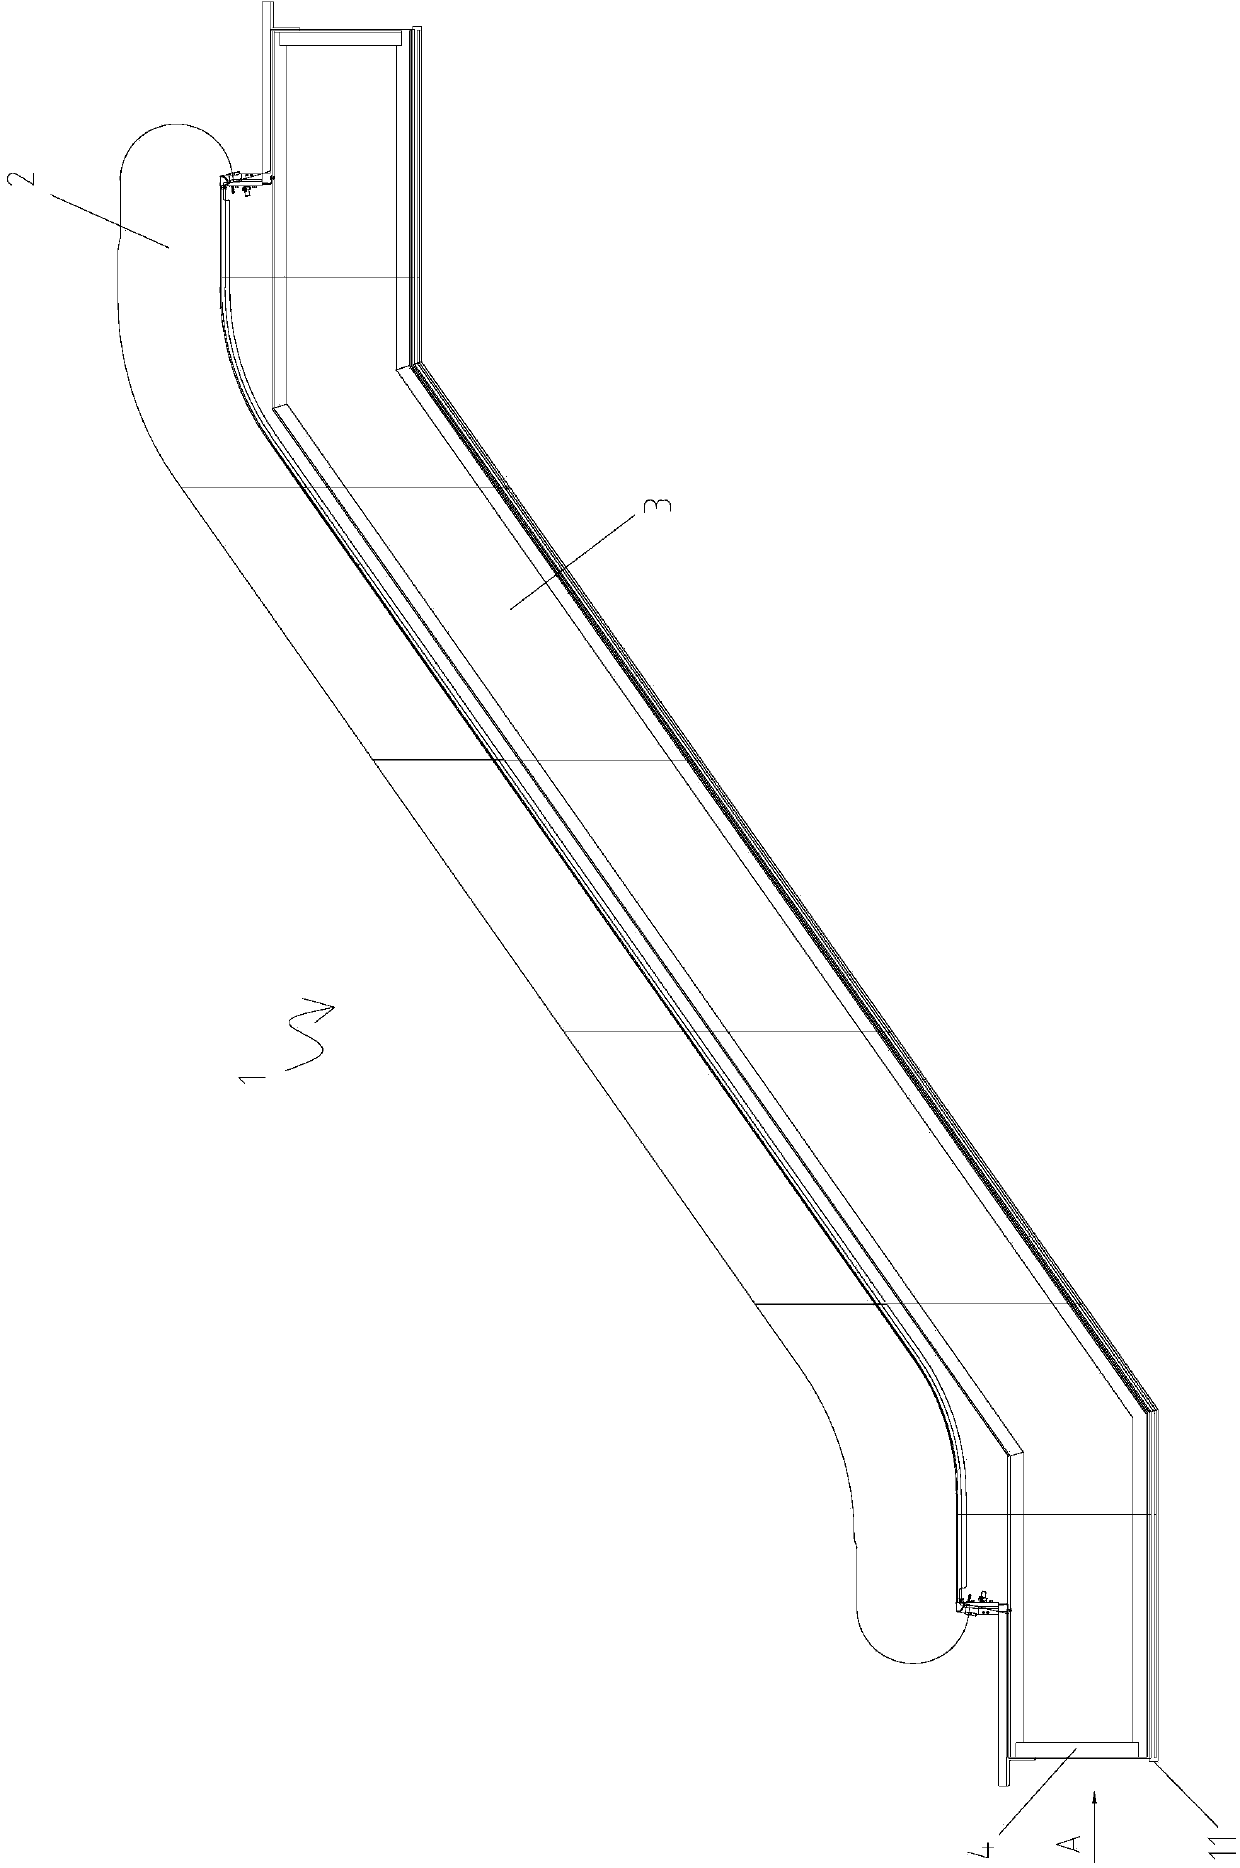 Illumination device of bottom protection wall of escalator